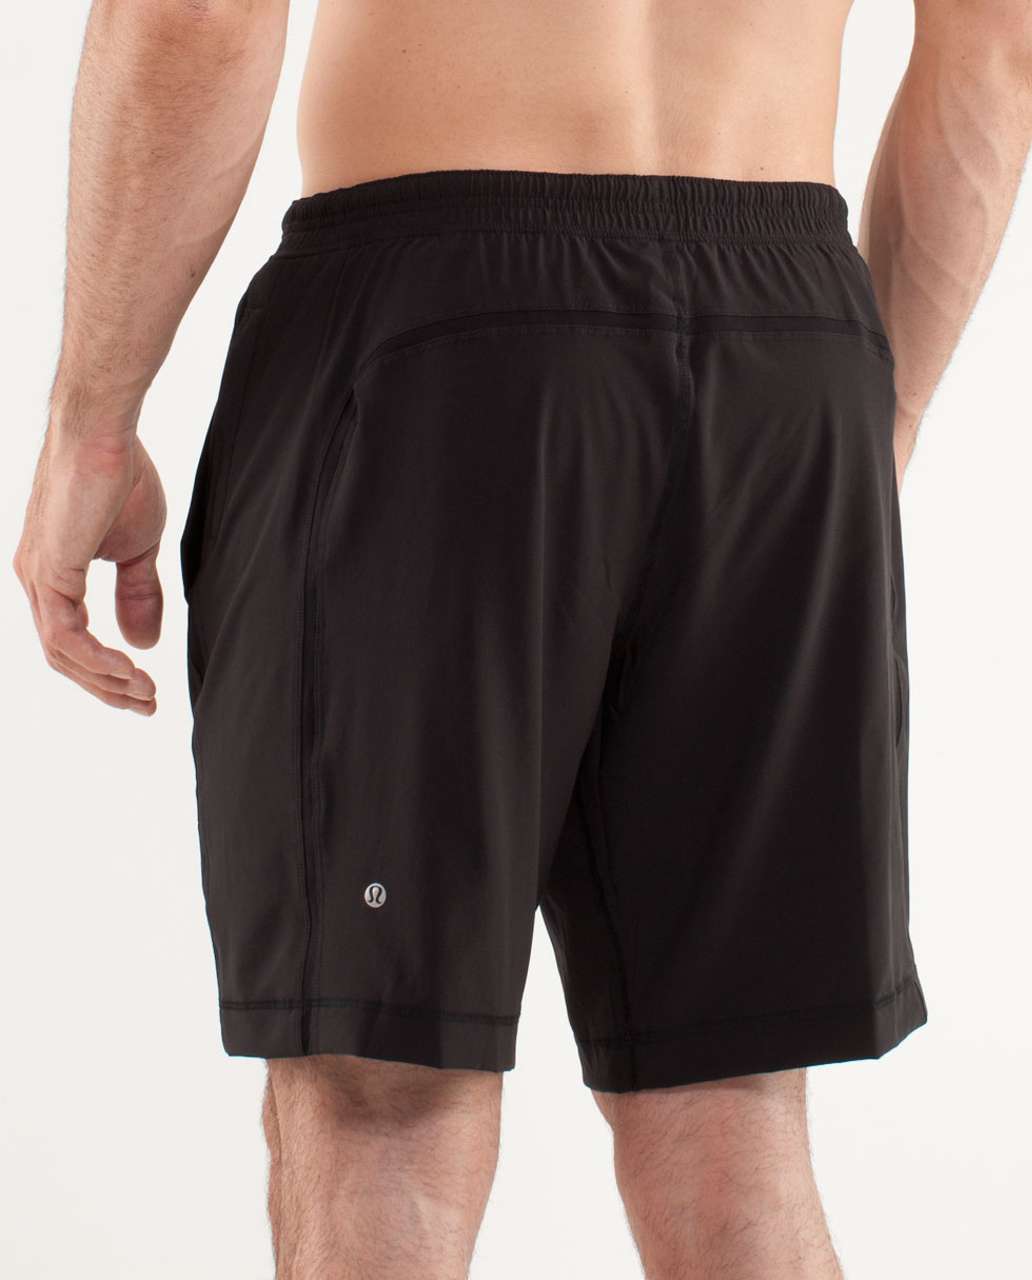 lululemon shorts men